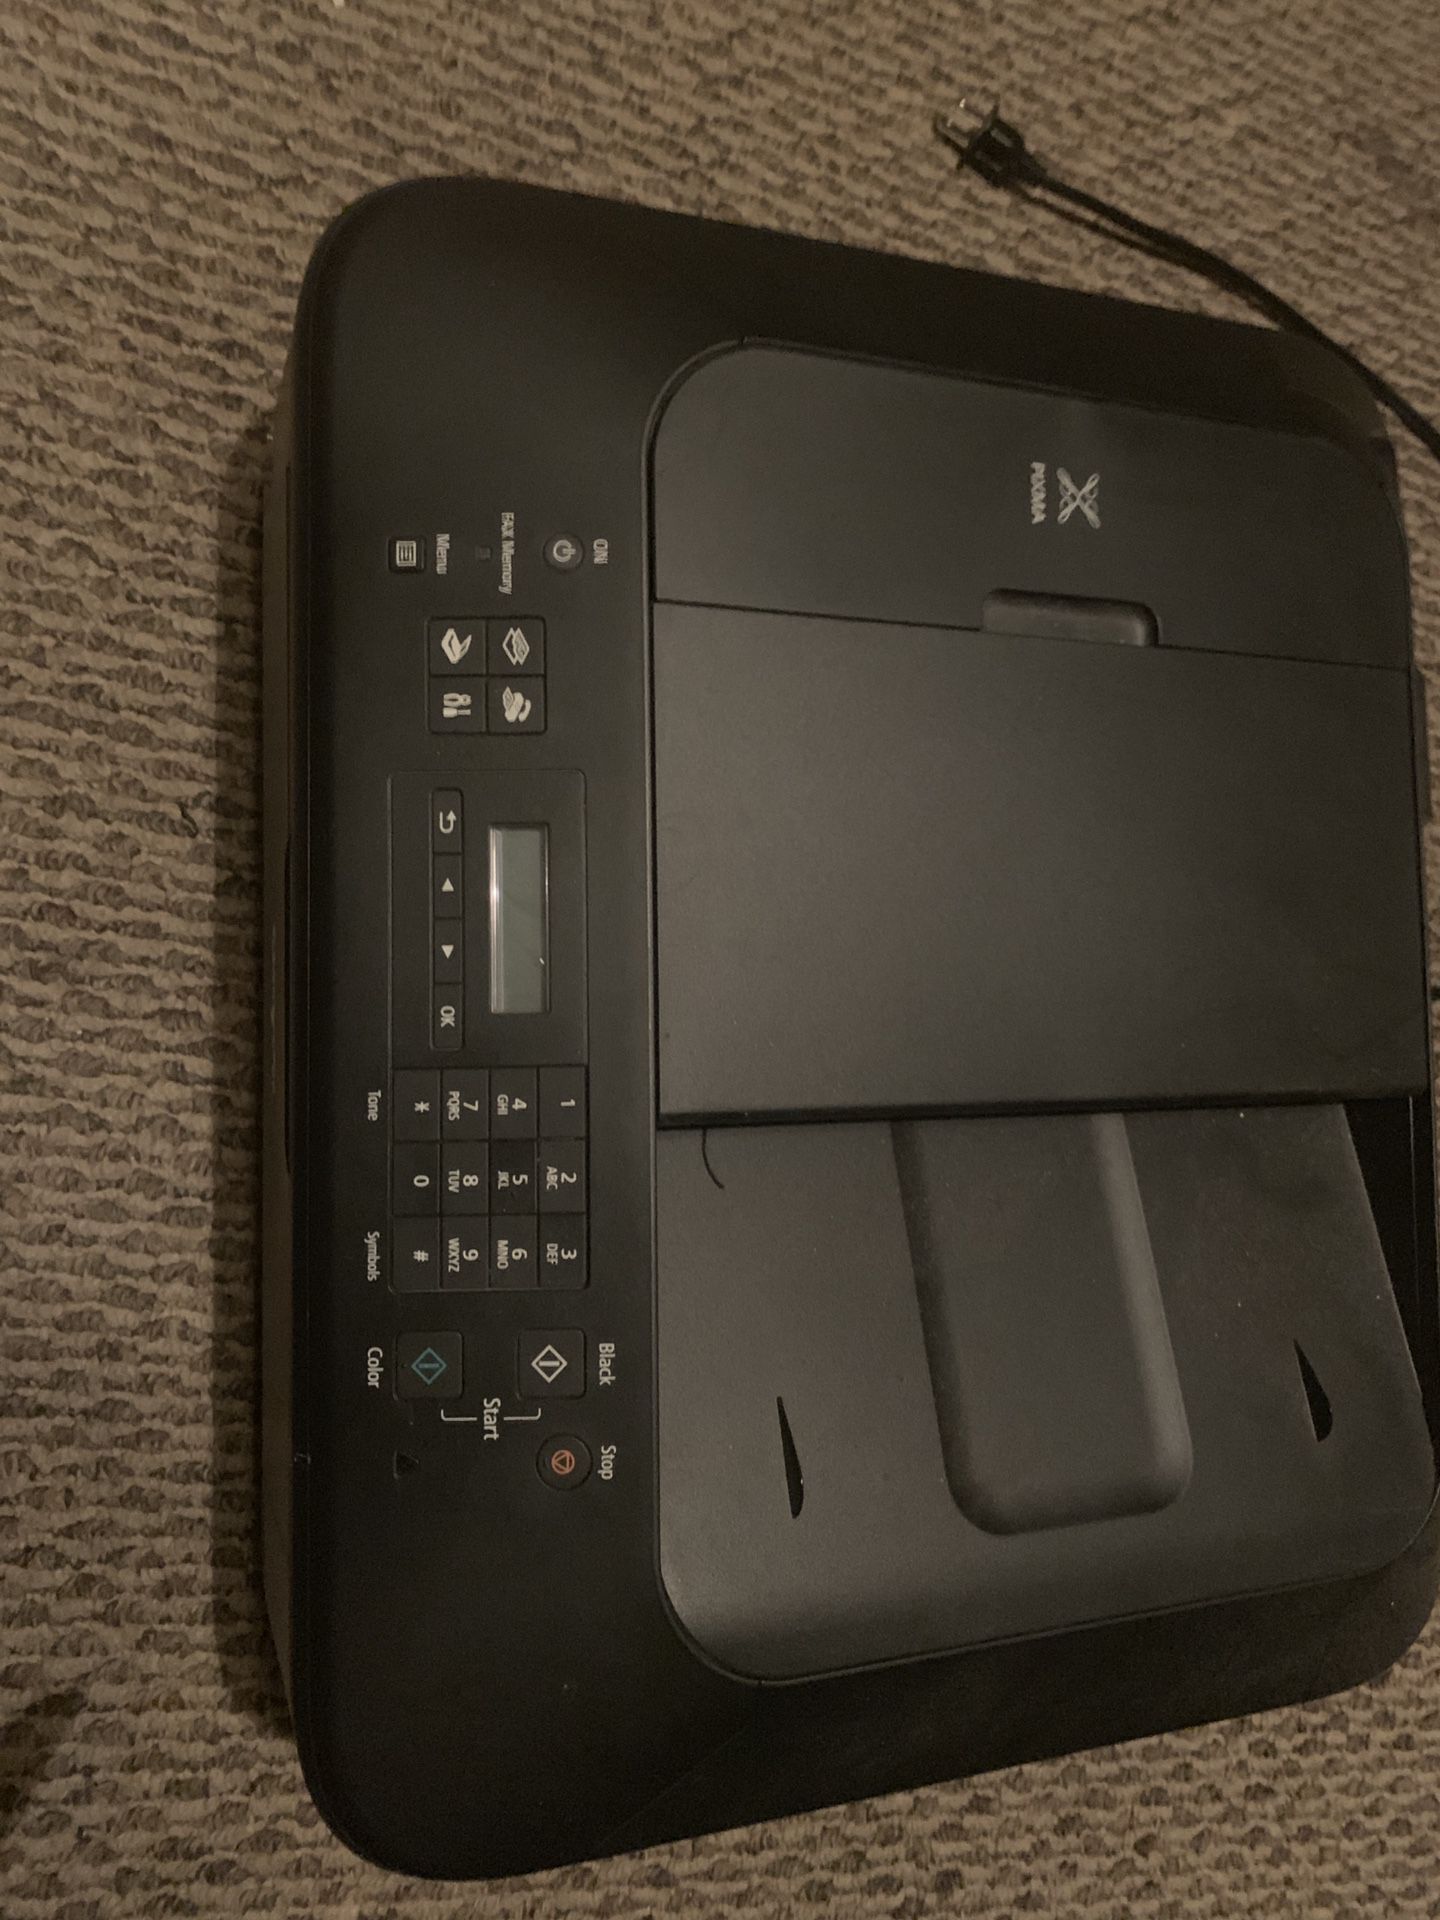 Printer/Fax/Scanner